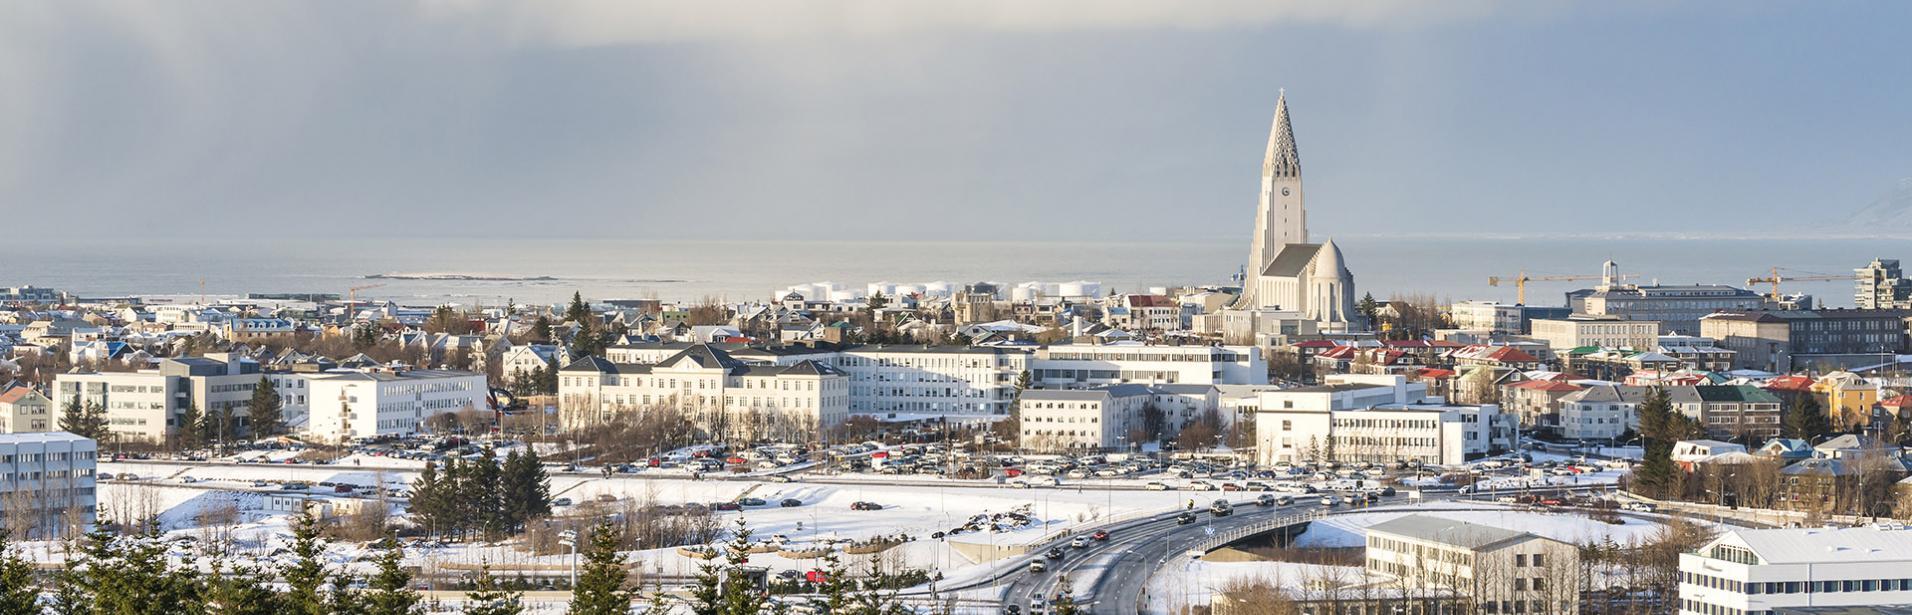 reykjavik, island, vinter